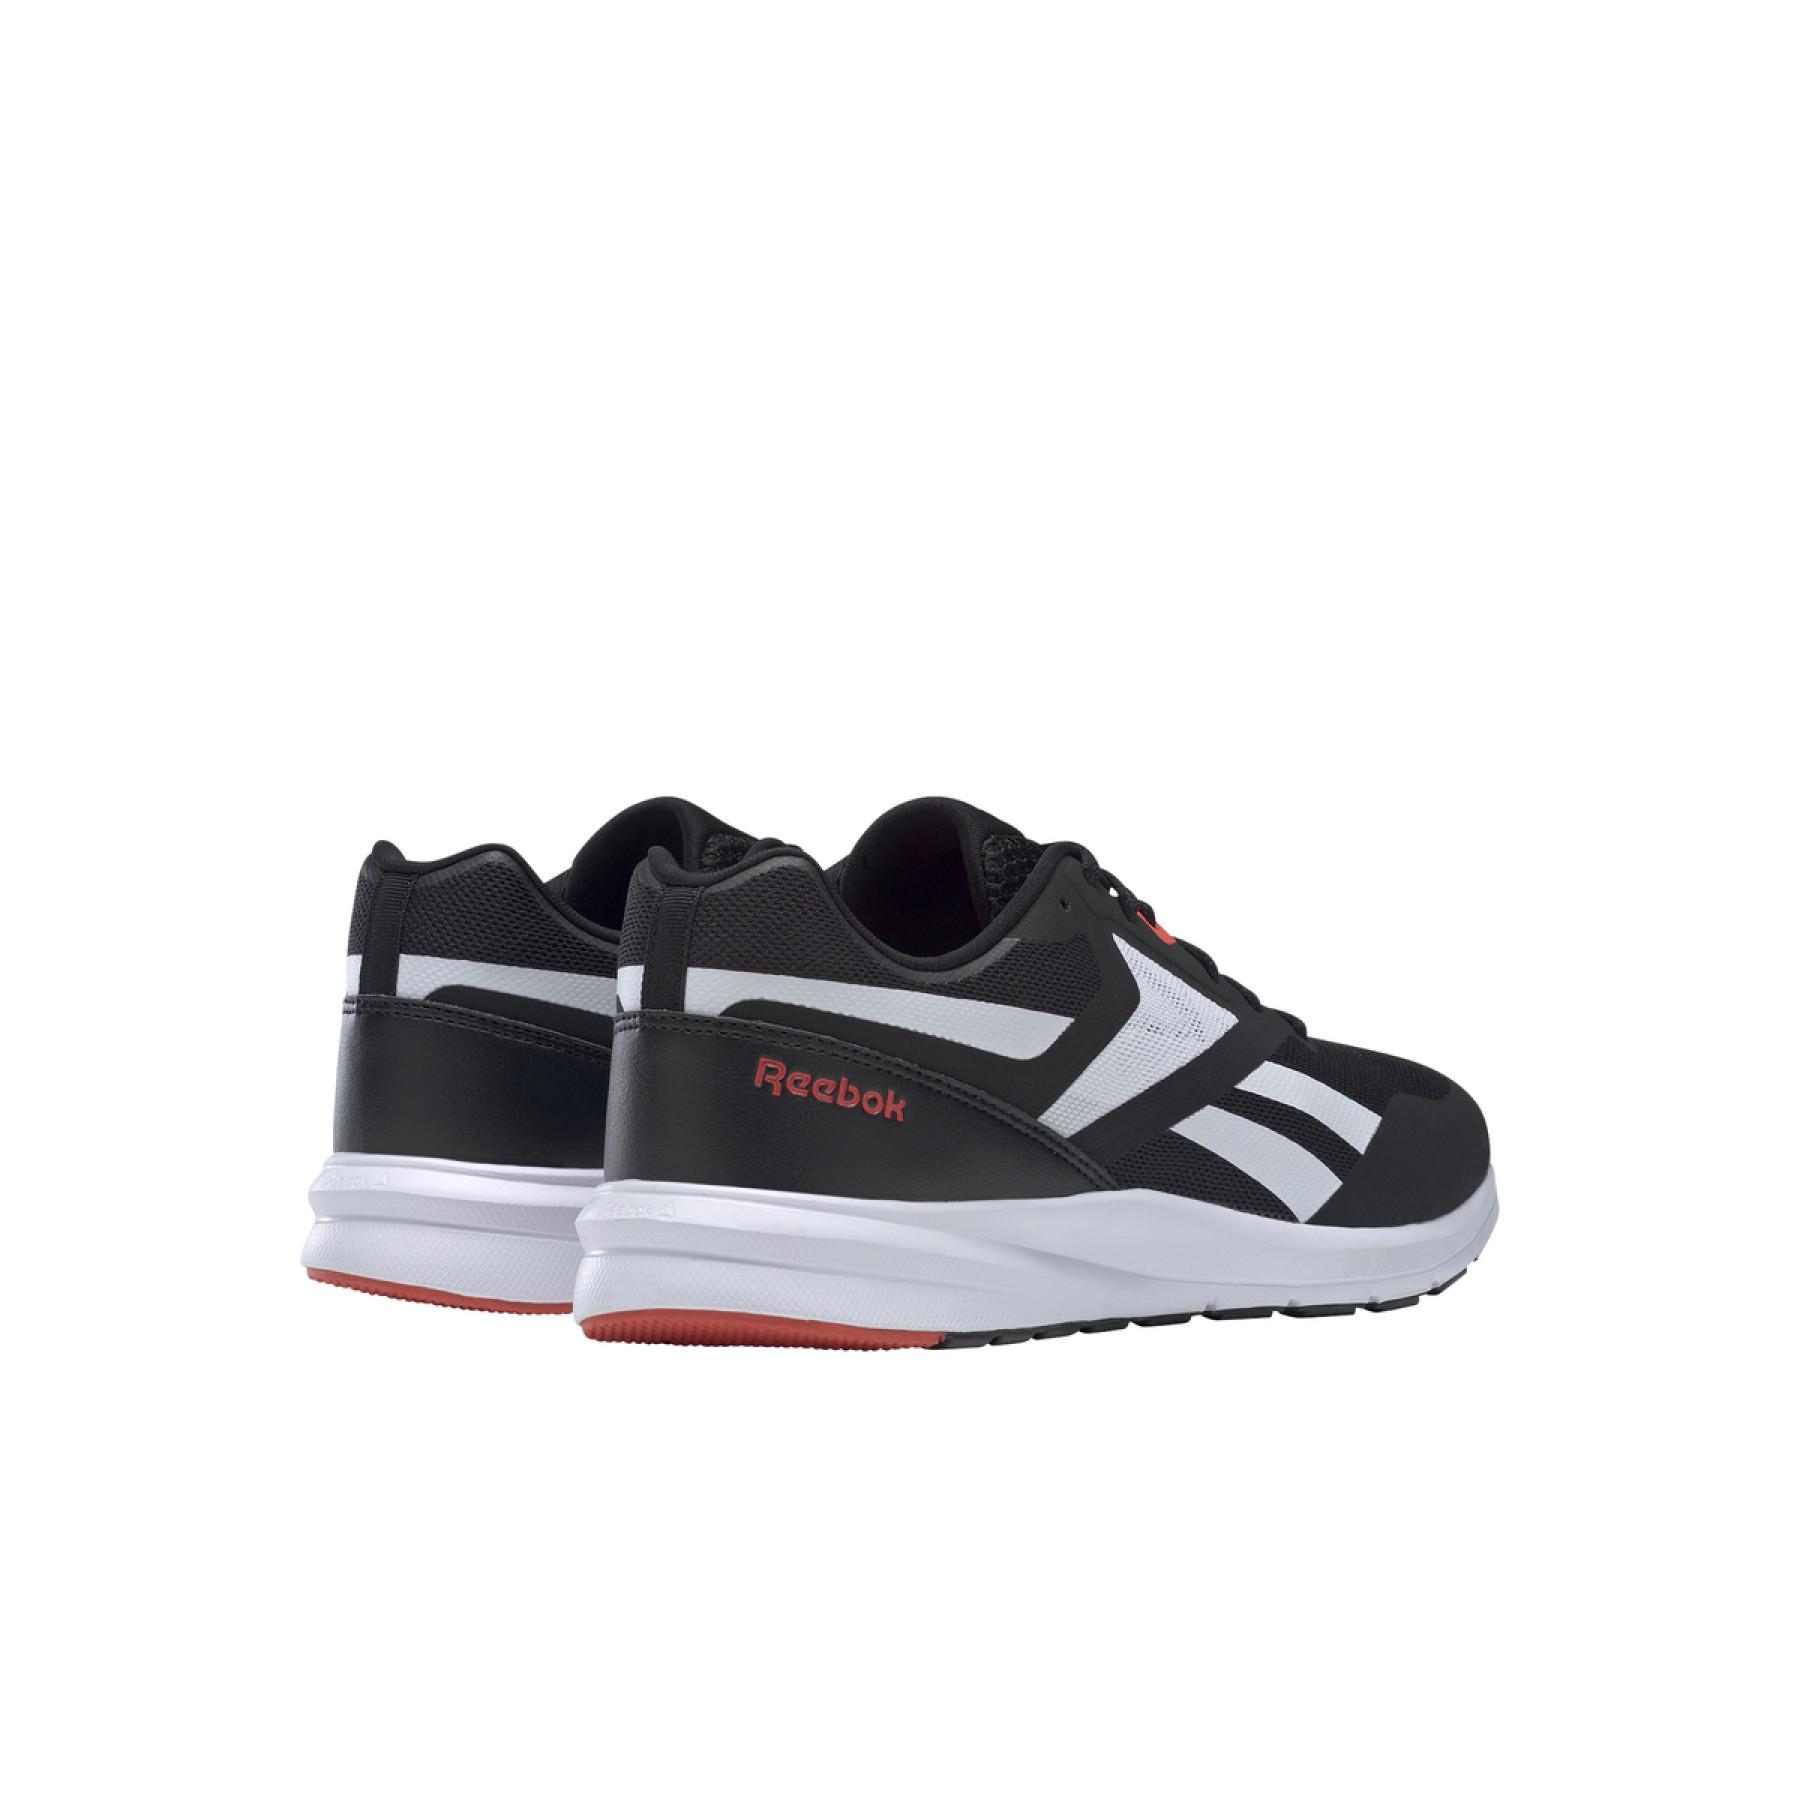 Sapatos Reebok Runner 4.0